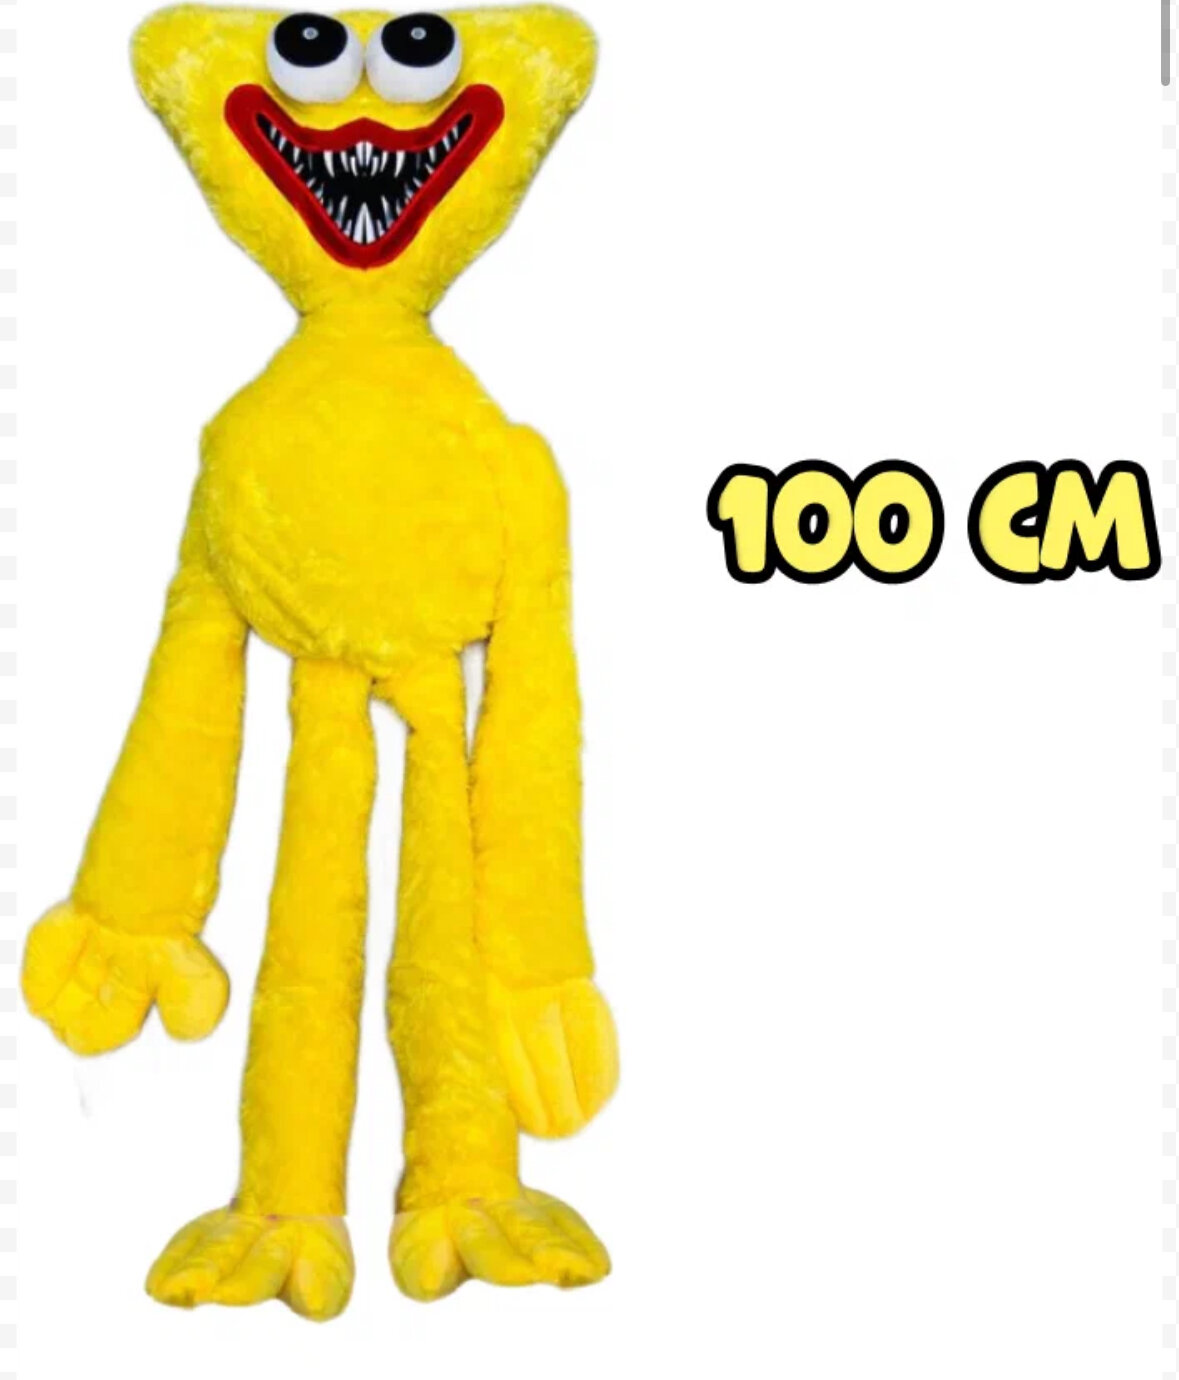 Хаги ваги, большой, 1 метр Мягкая игрушка Хаги Ваги Хагги Вагги huggy wuggy poppy playtime 100 см, желтый